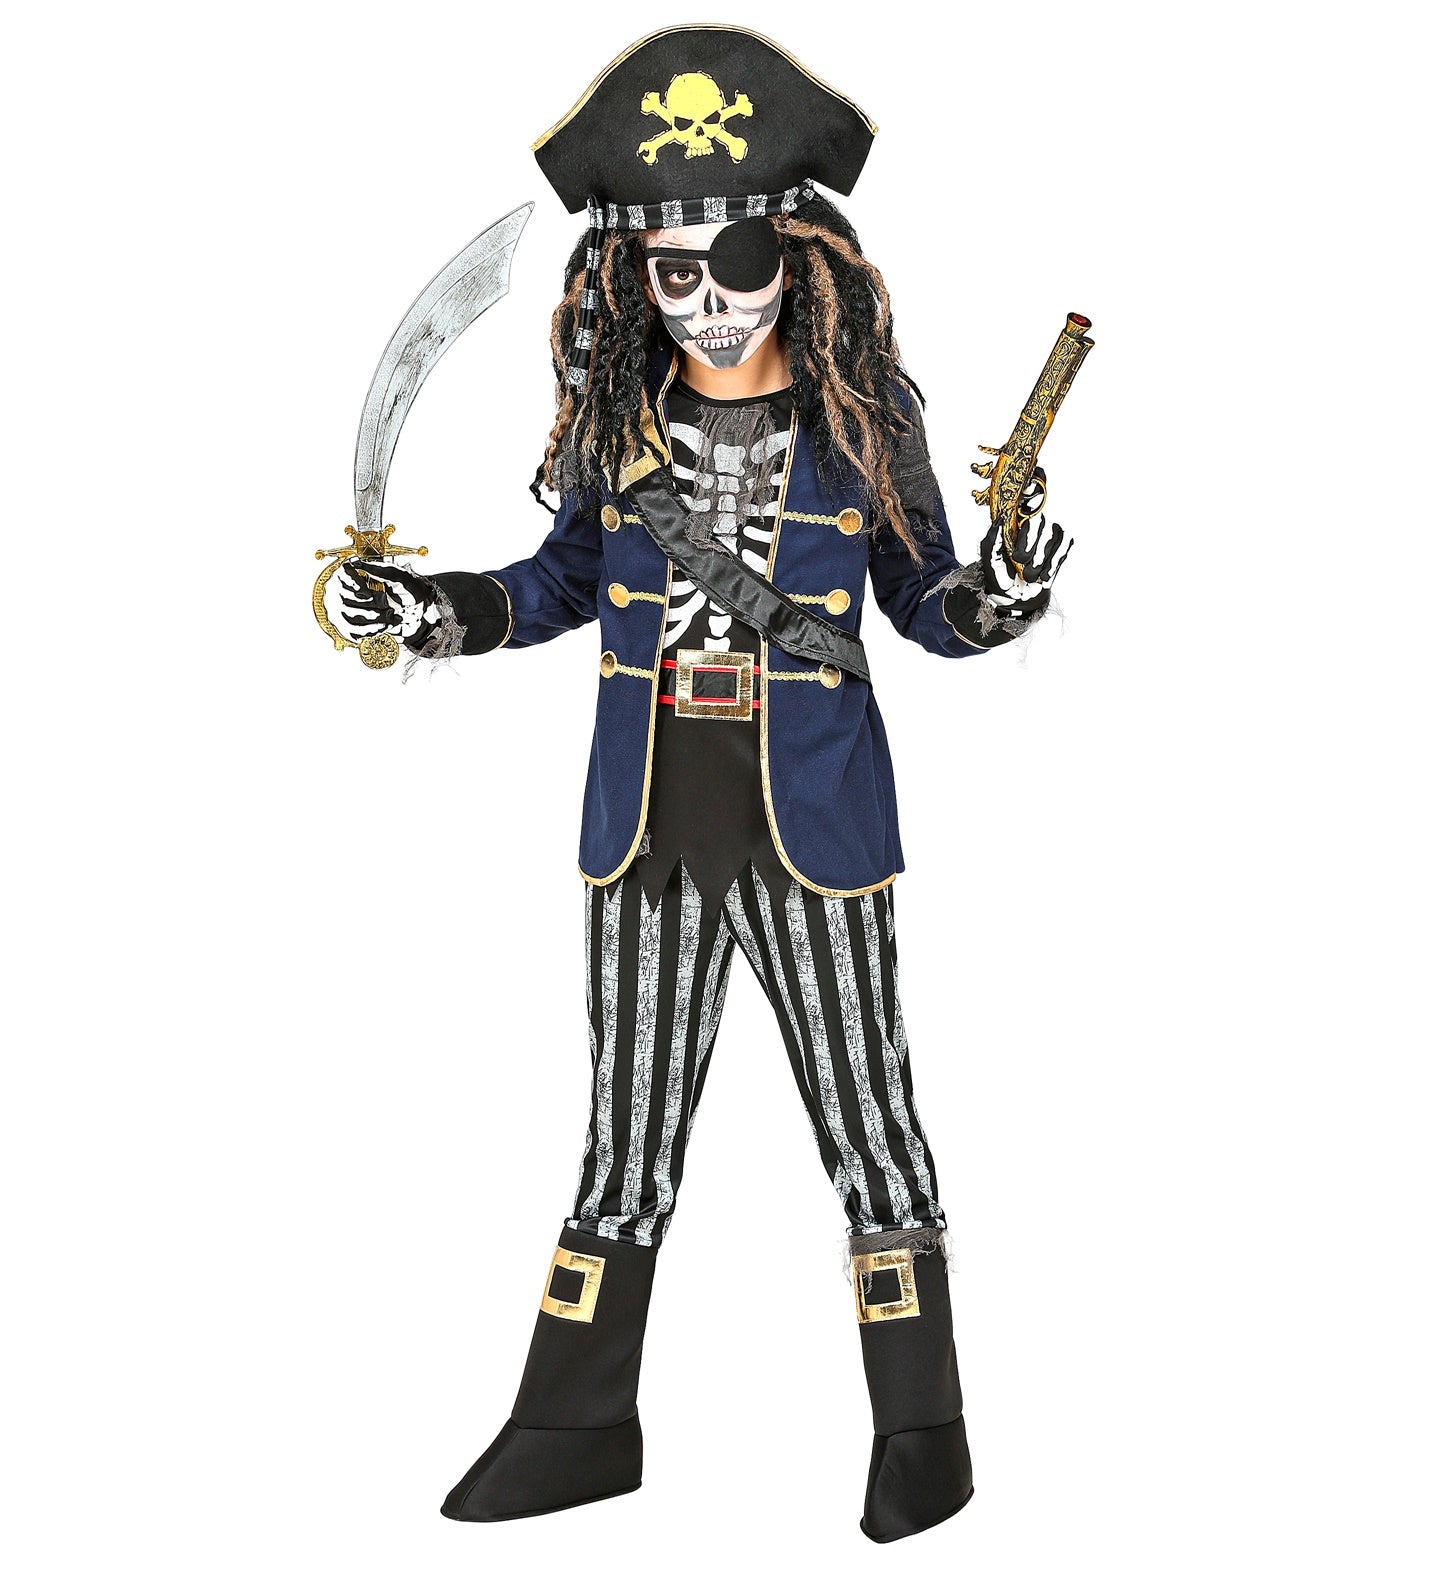 Pirate Captain Skeleton Costume children's Halloween